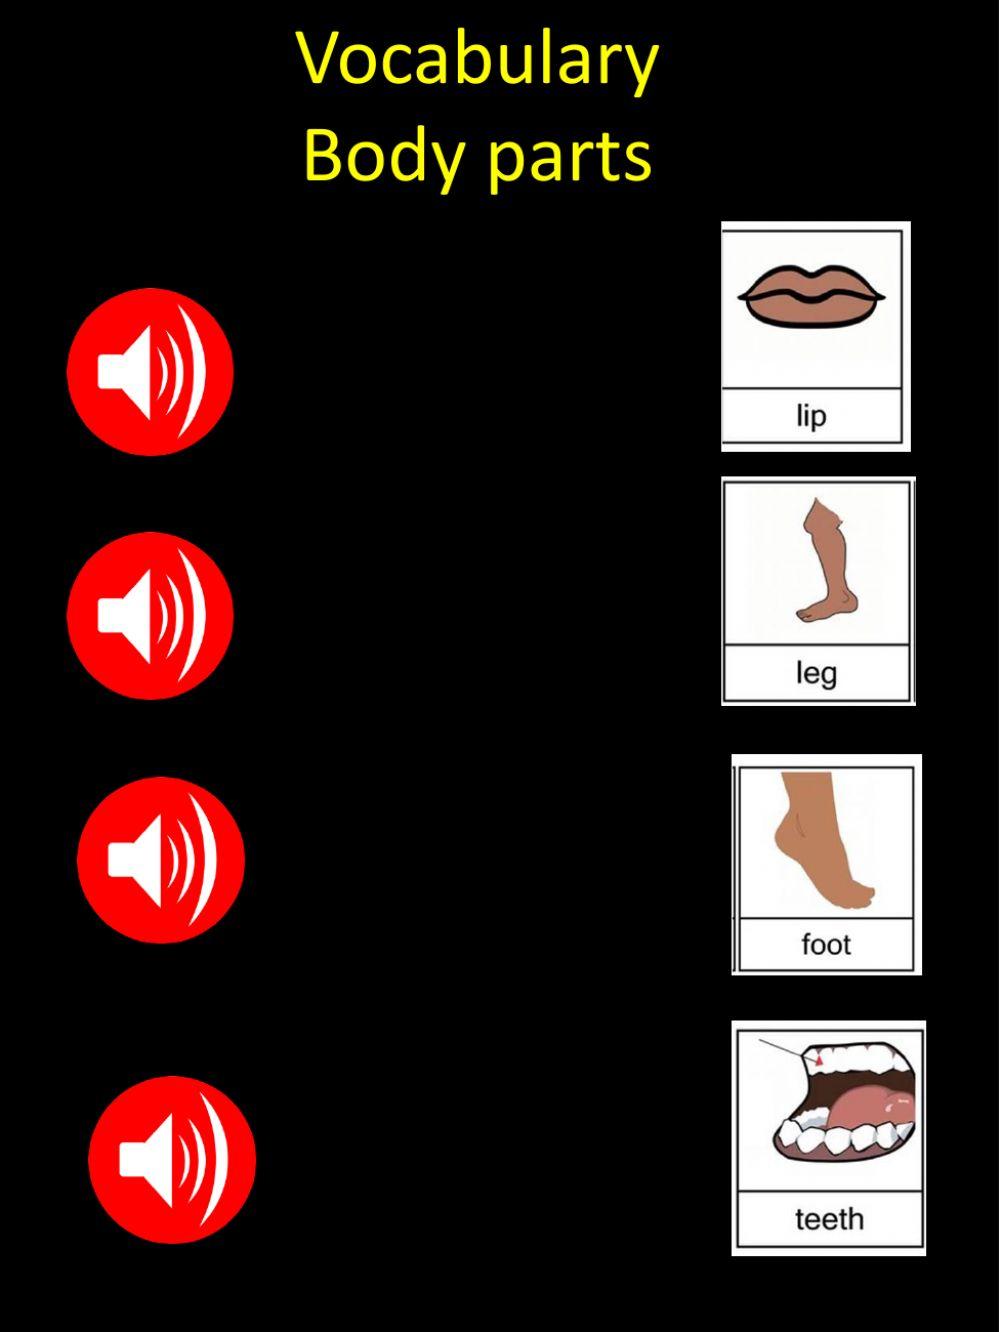 Vocabulary, Body parts